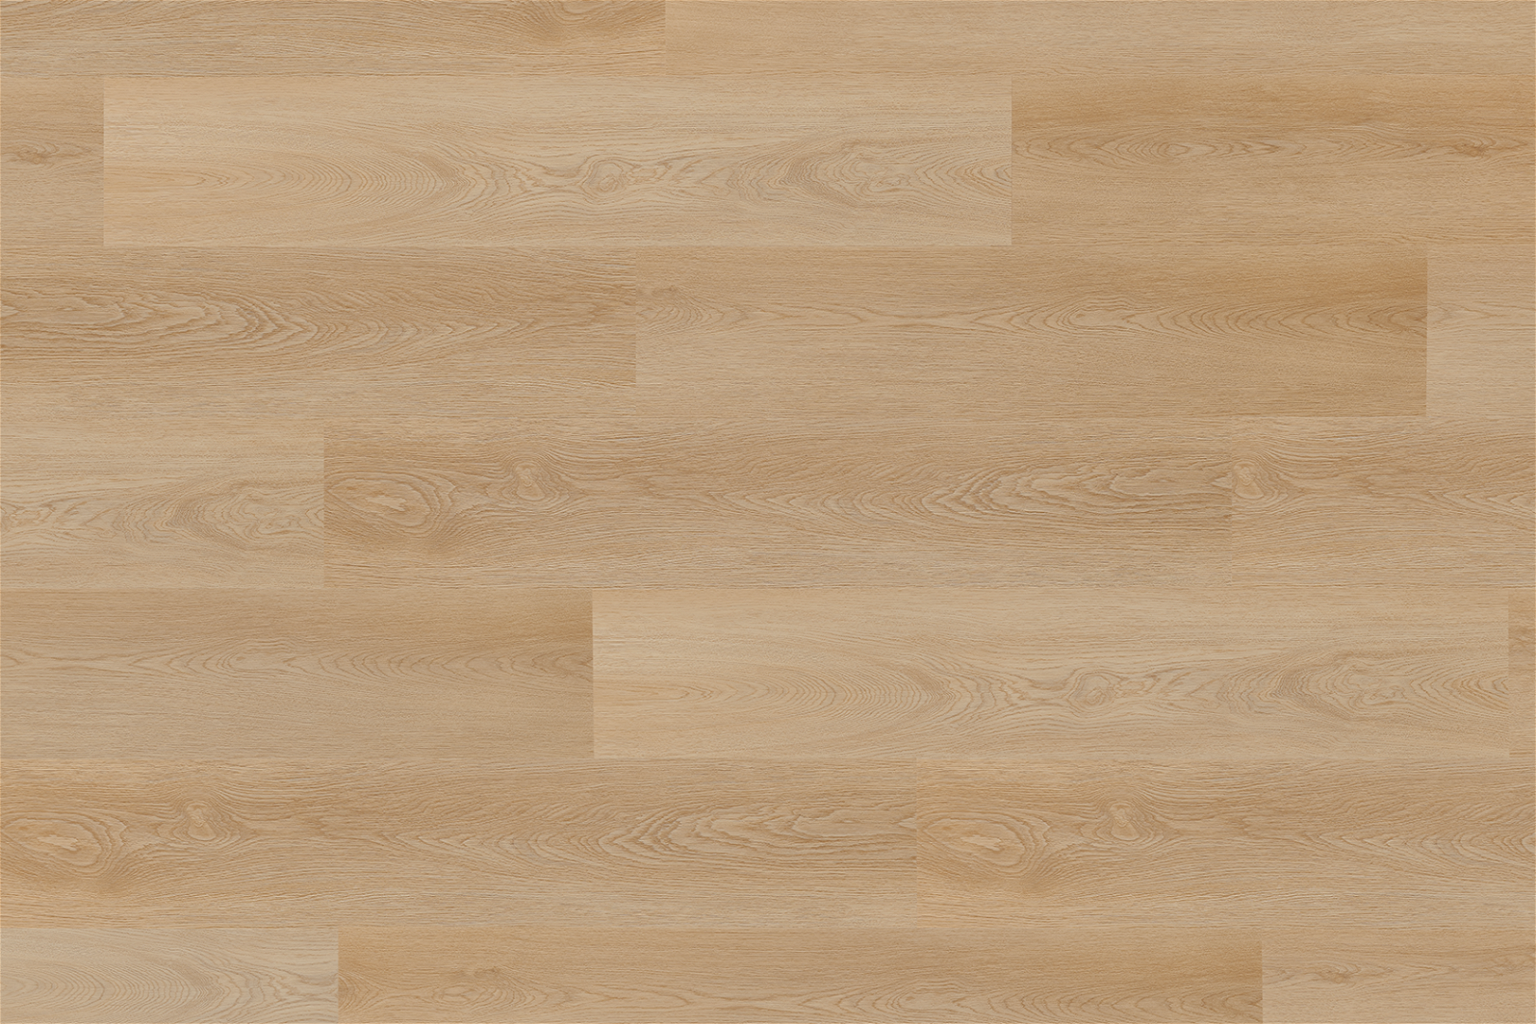 SPC vinilinės grindys AFIRMAX Legnar, 1220 x 229 x 4 mm, Hartfordo ąž.sp., dėvimasis 0,55 mm, 33 kl. - 2